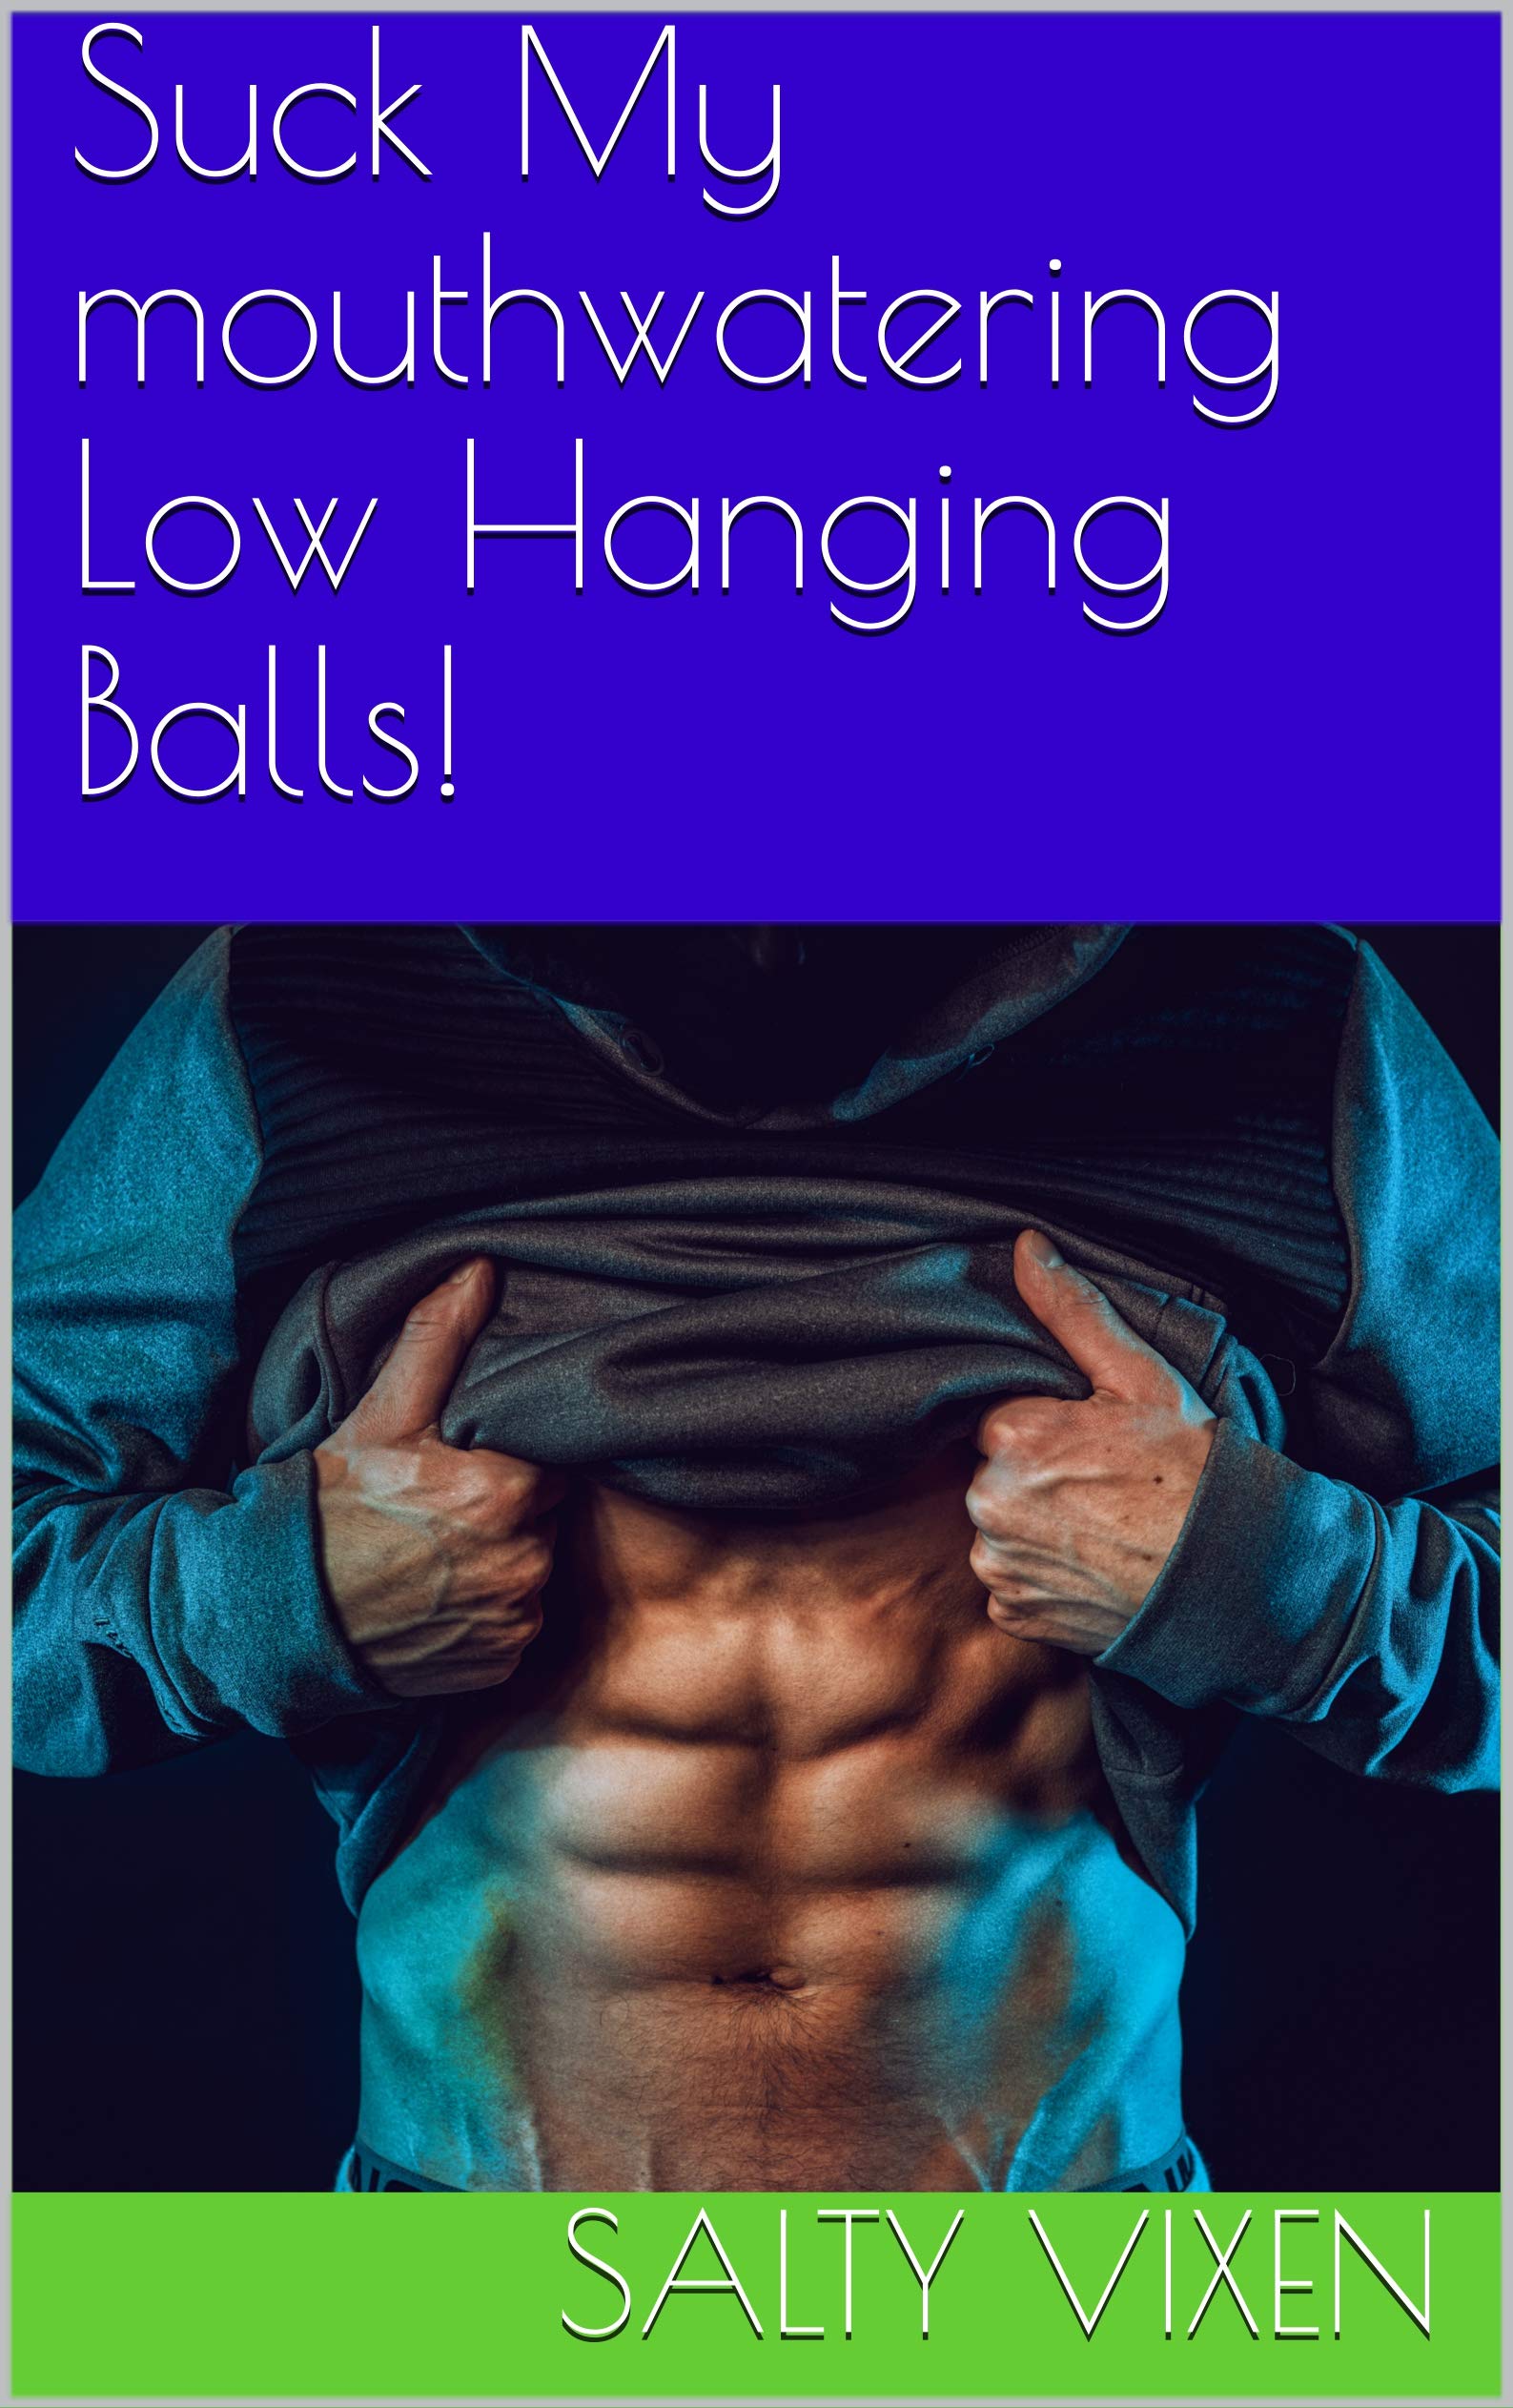 angel armendariz recommends Very Low Hanging Balls